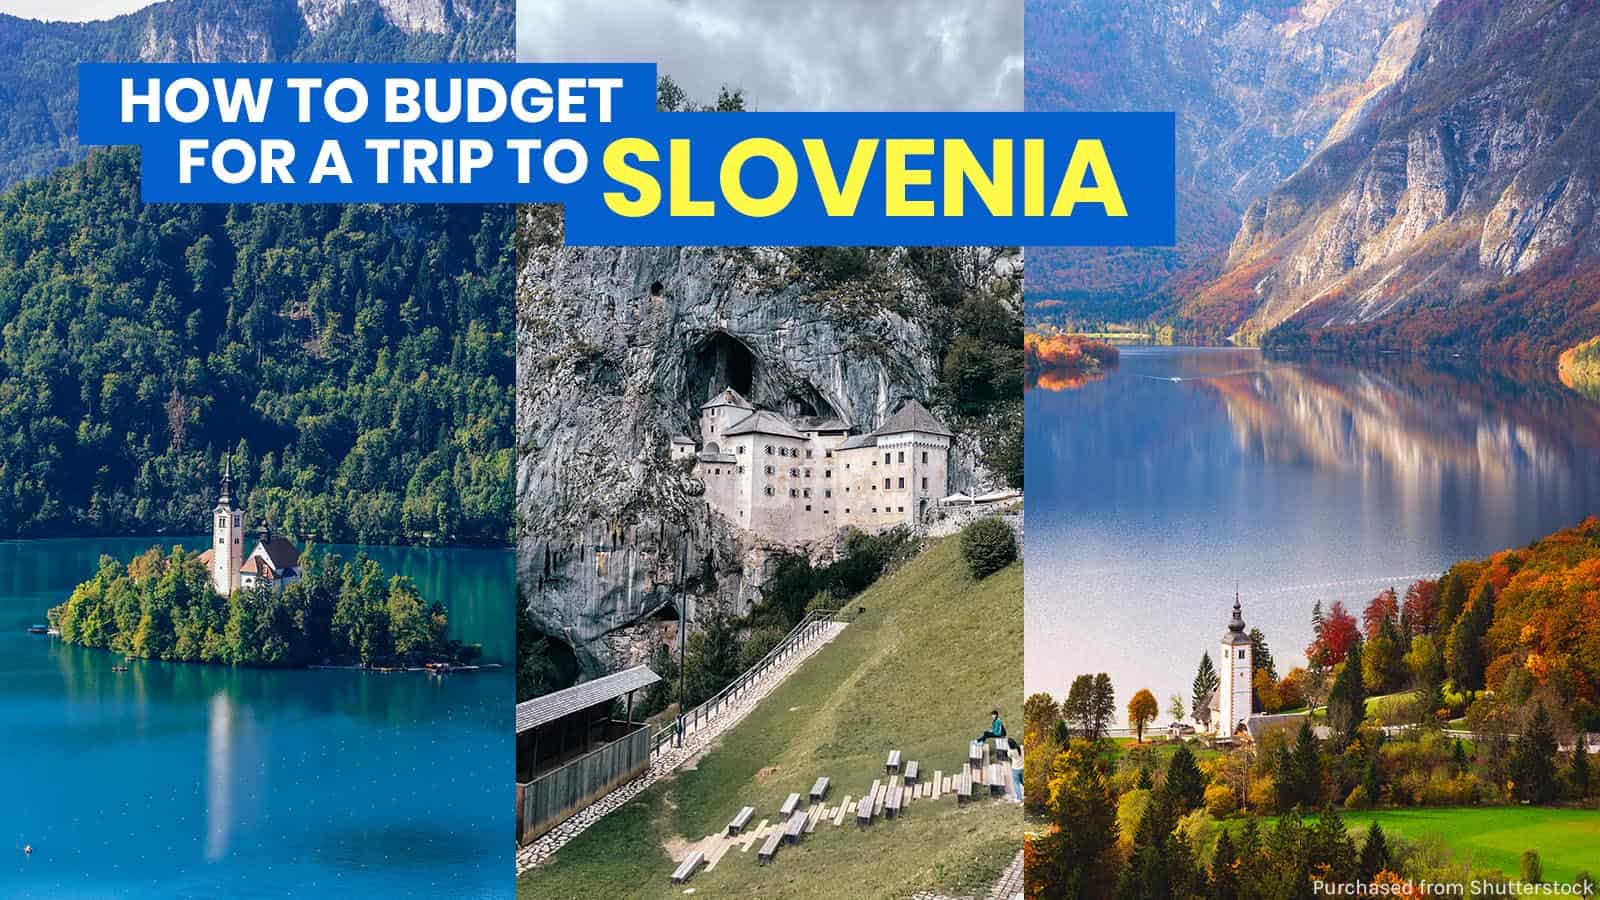 SLOVENIA TRAVEL GUIDE: Ljubljana Itinerary & Budget